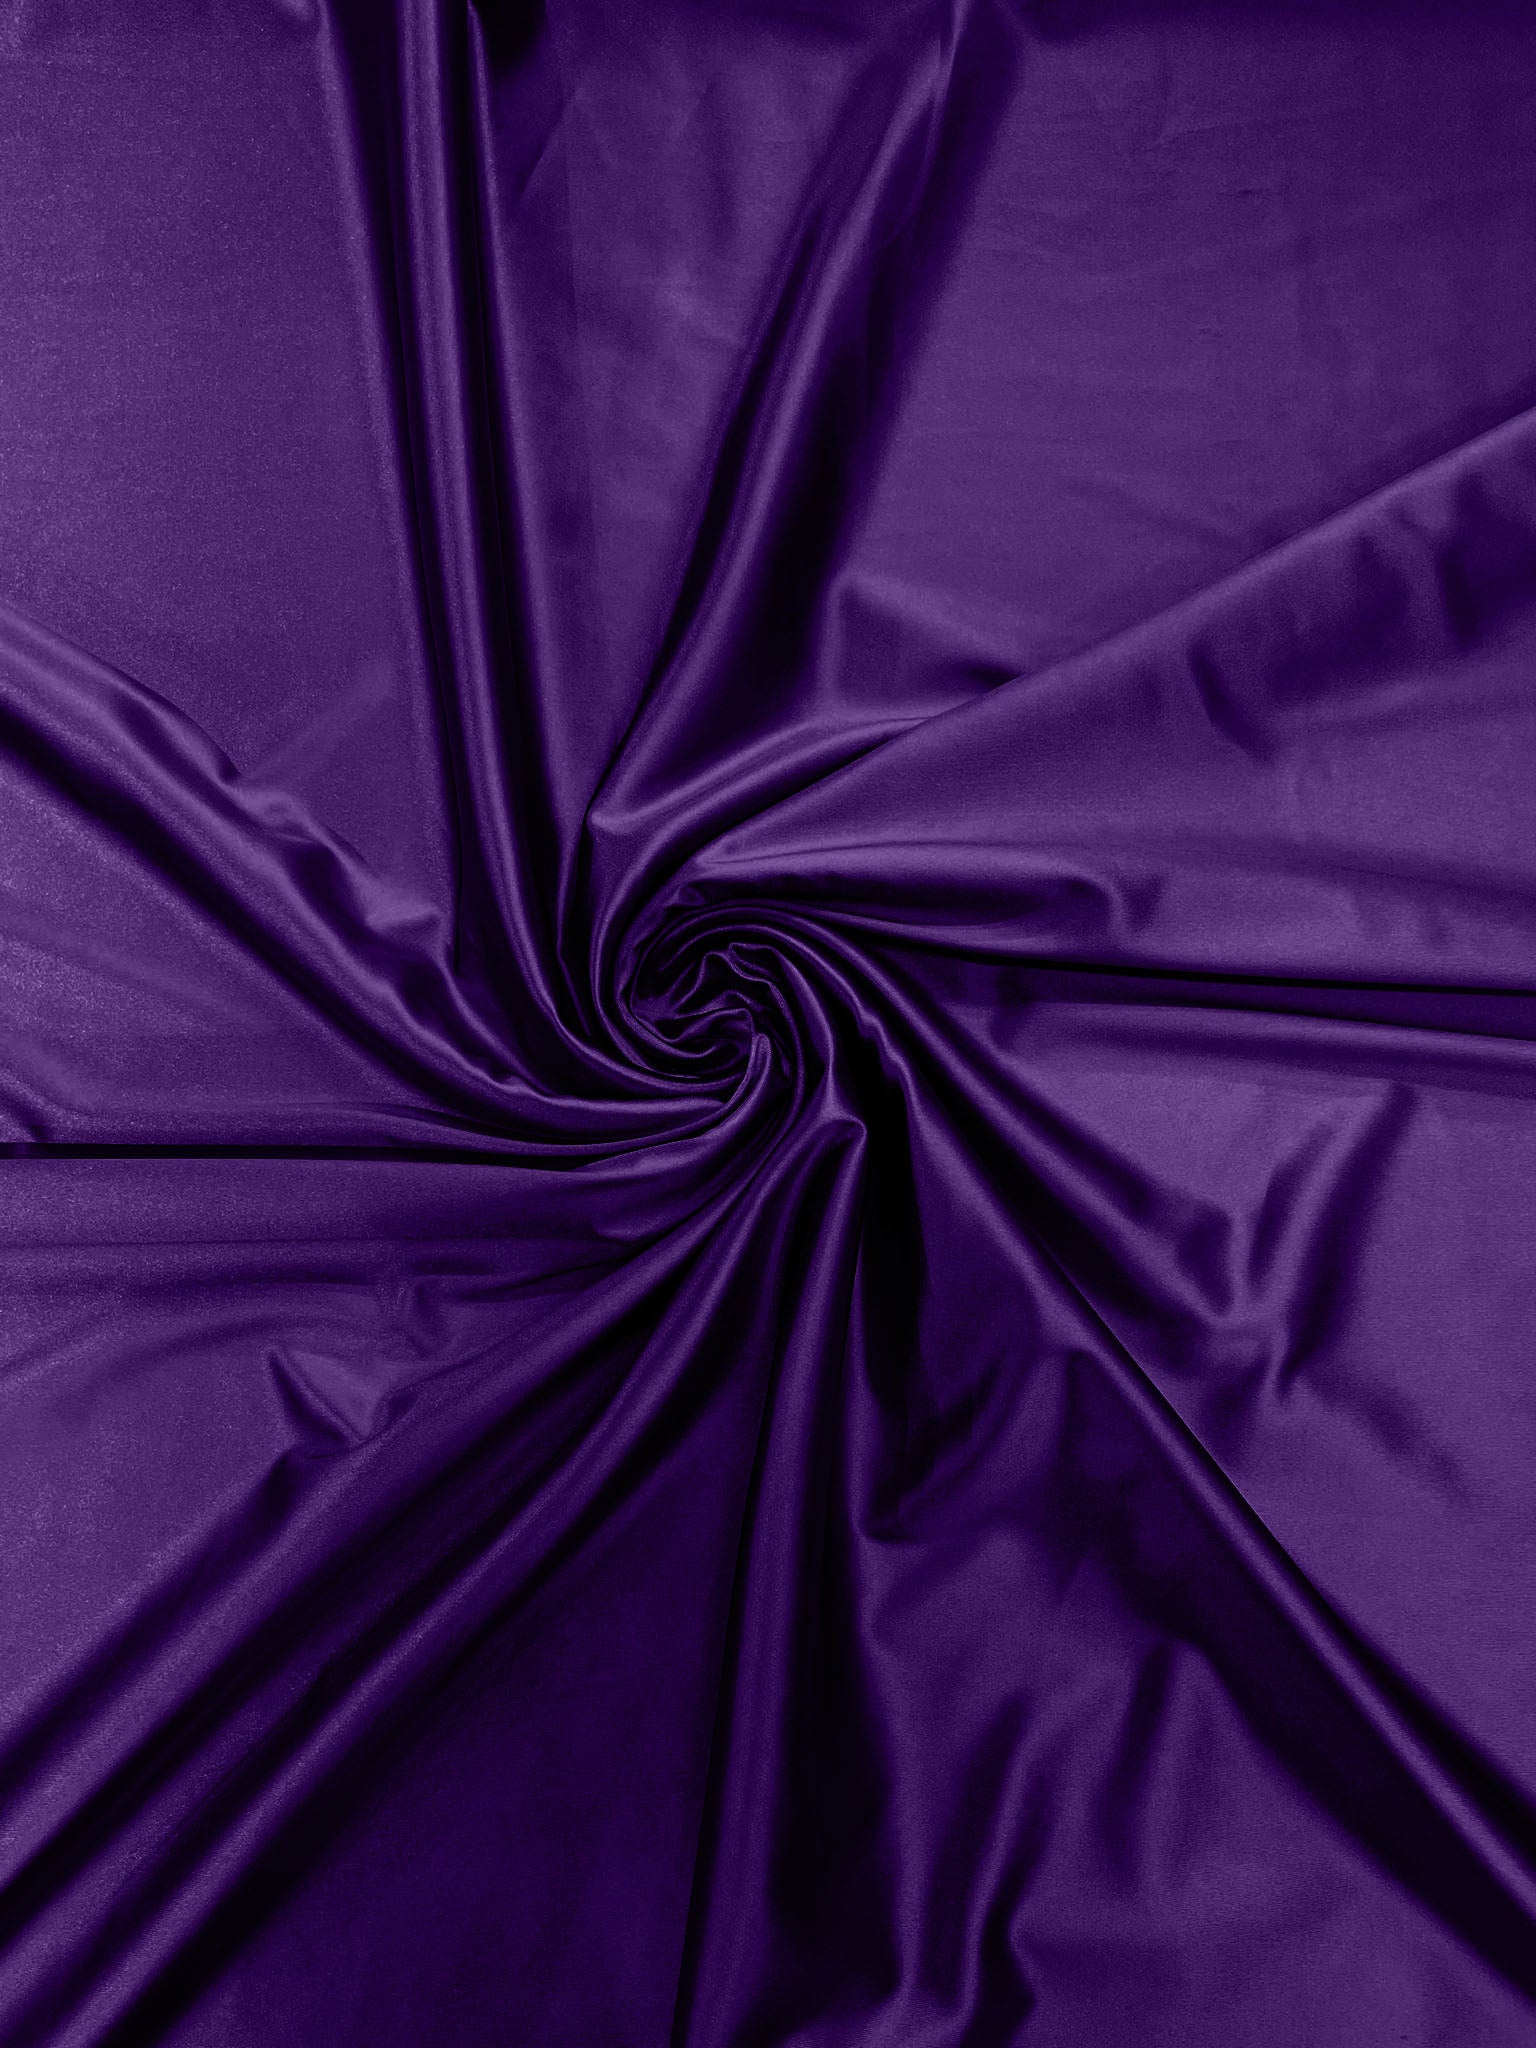 Purple Heavy Shiny Satin Stretch Spandex Fabric/58 Inches Wide/Prom/Wedding/Cosplays.